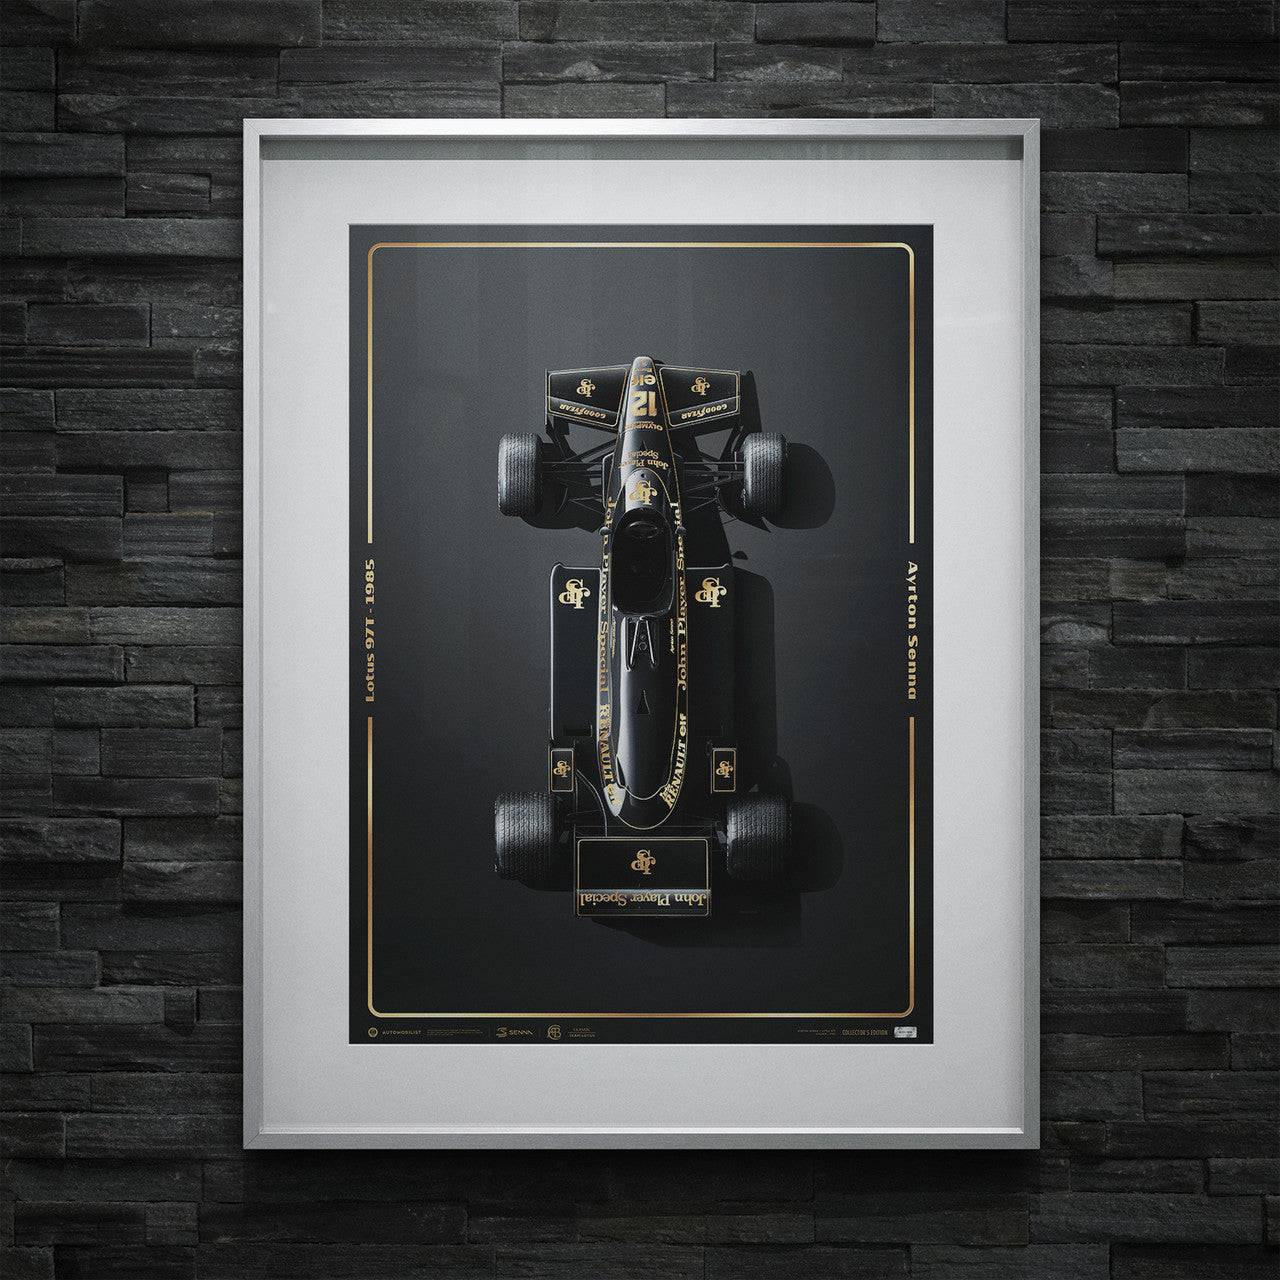 Lotus 97T - Ayrton Senna - Stunning Black - Estoril, 1985 | Collector’s Edition